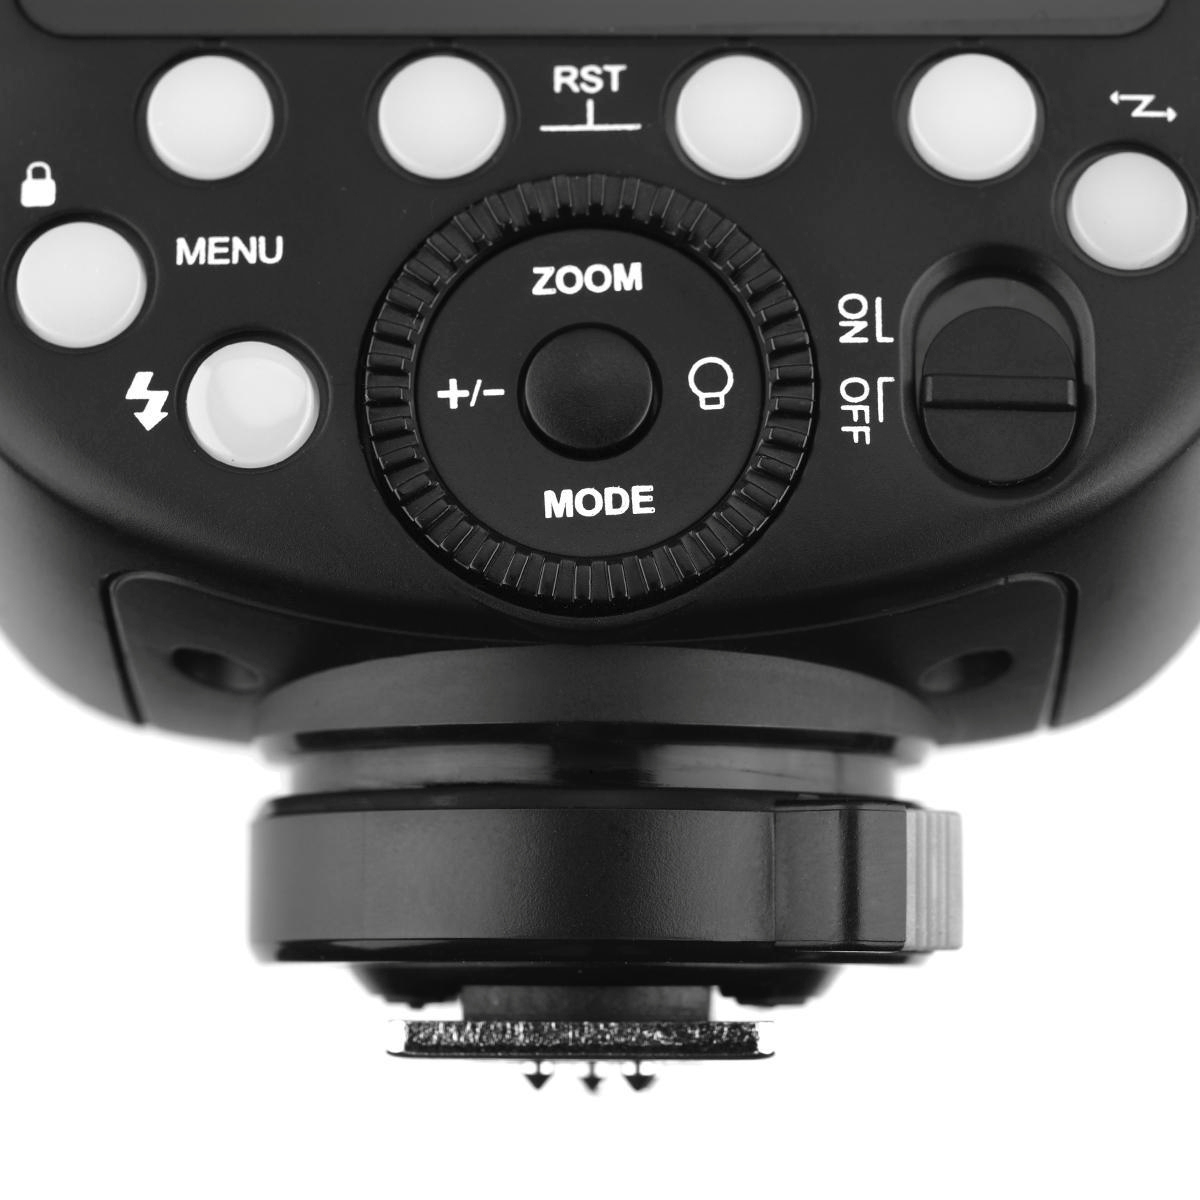 inkl. (E-TTL) V1C Systemblitzgerät Canon GODOX Akku für